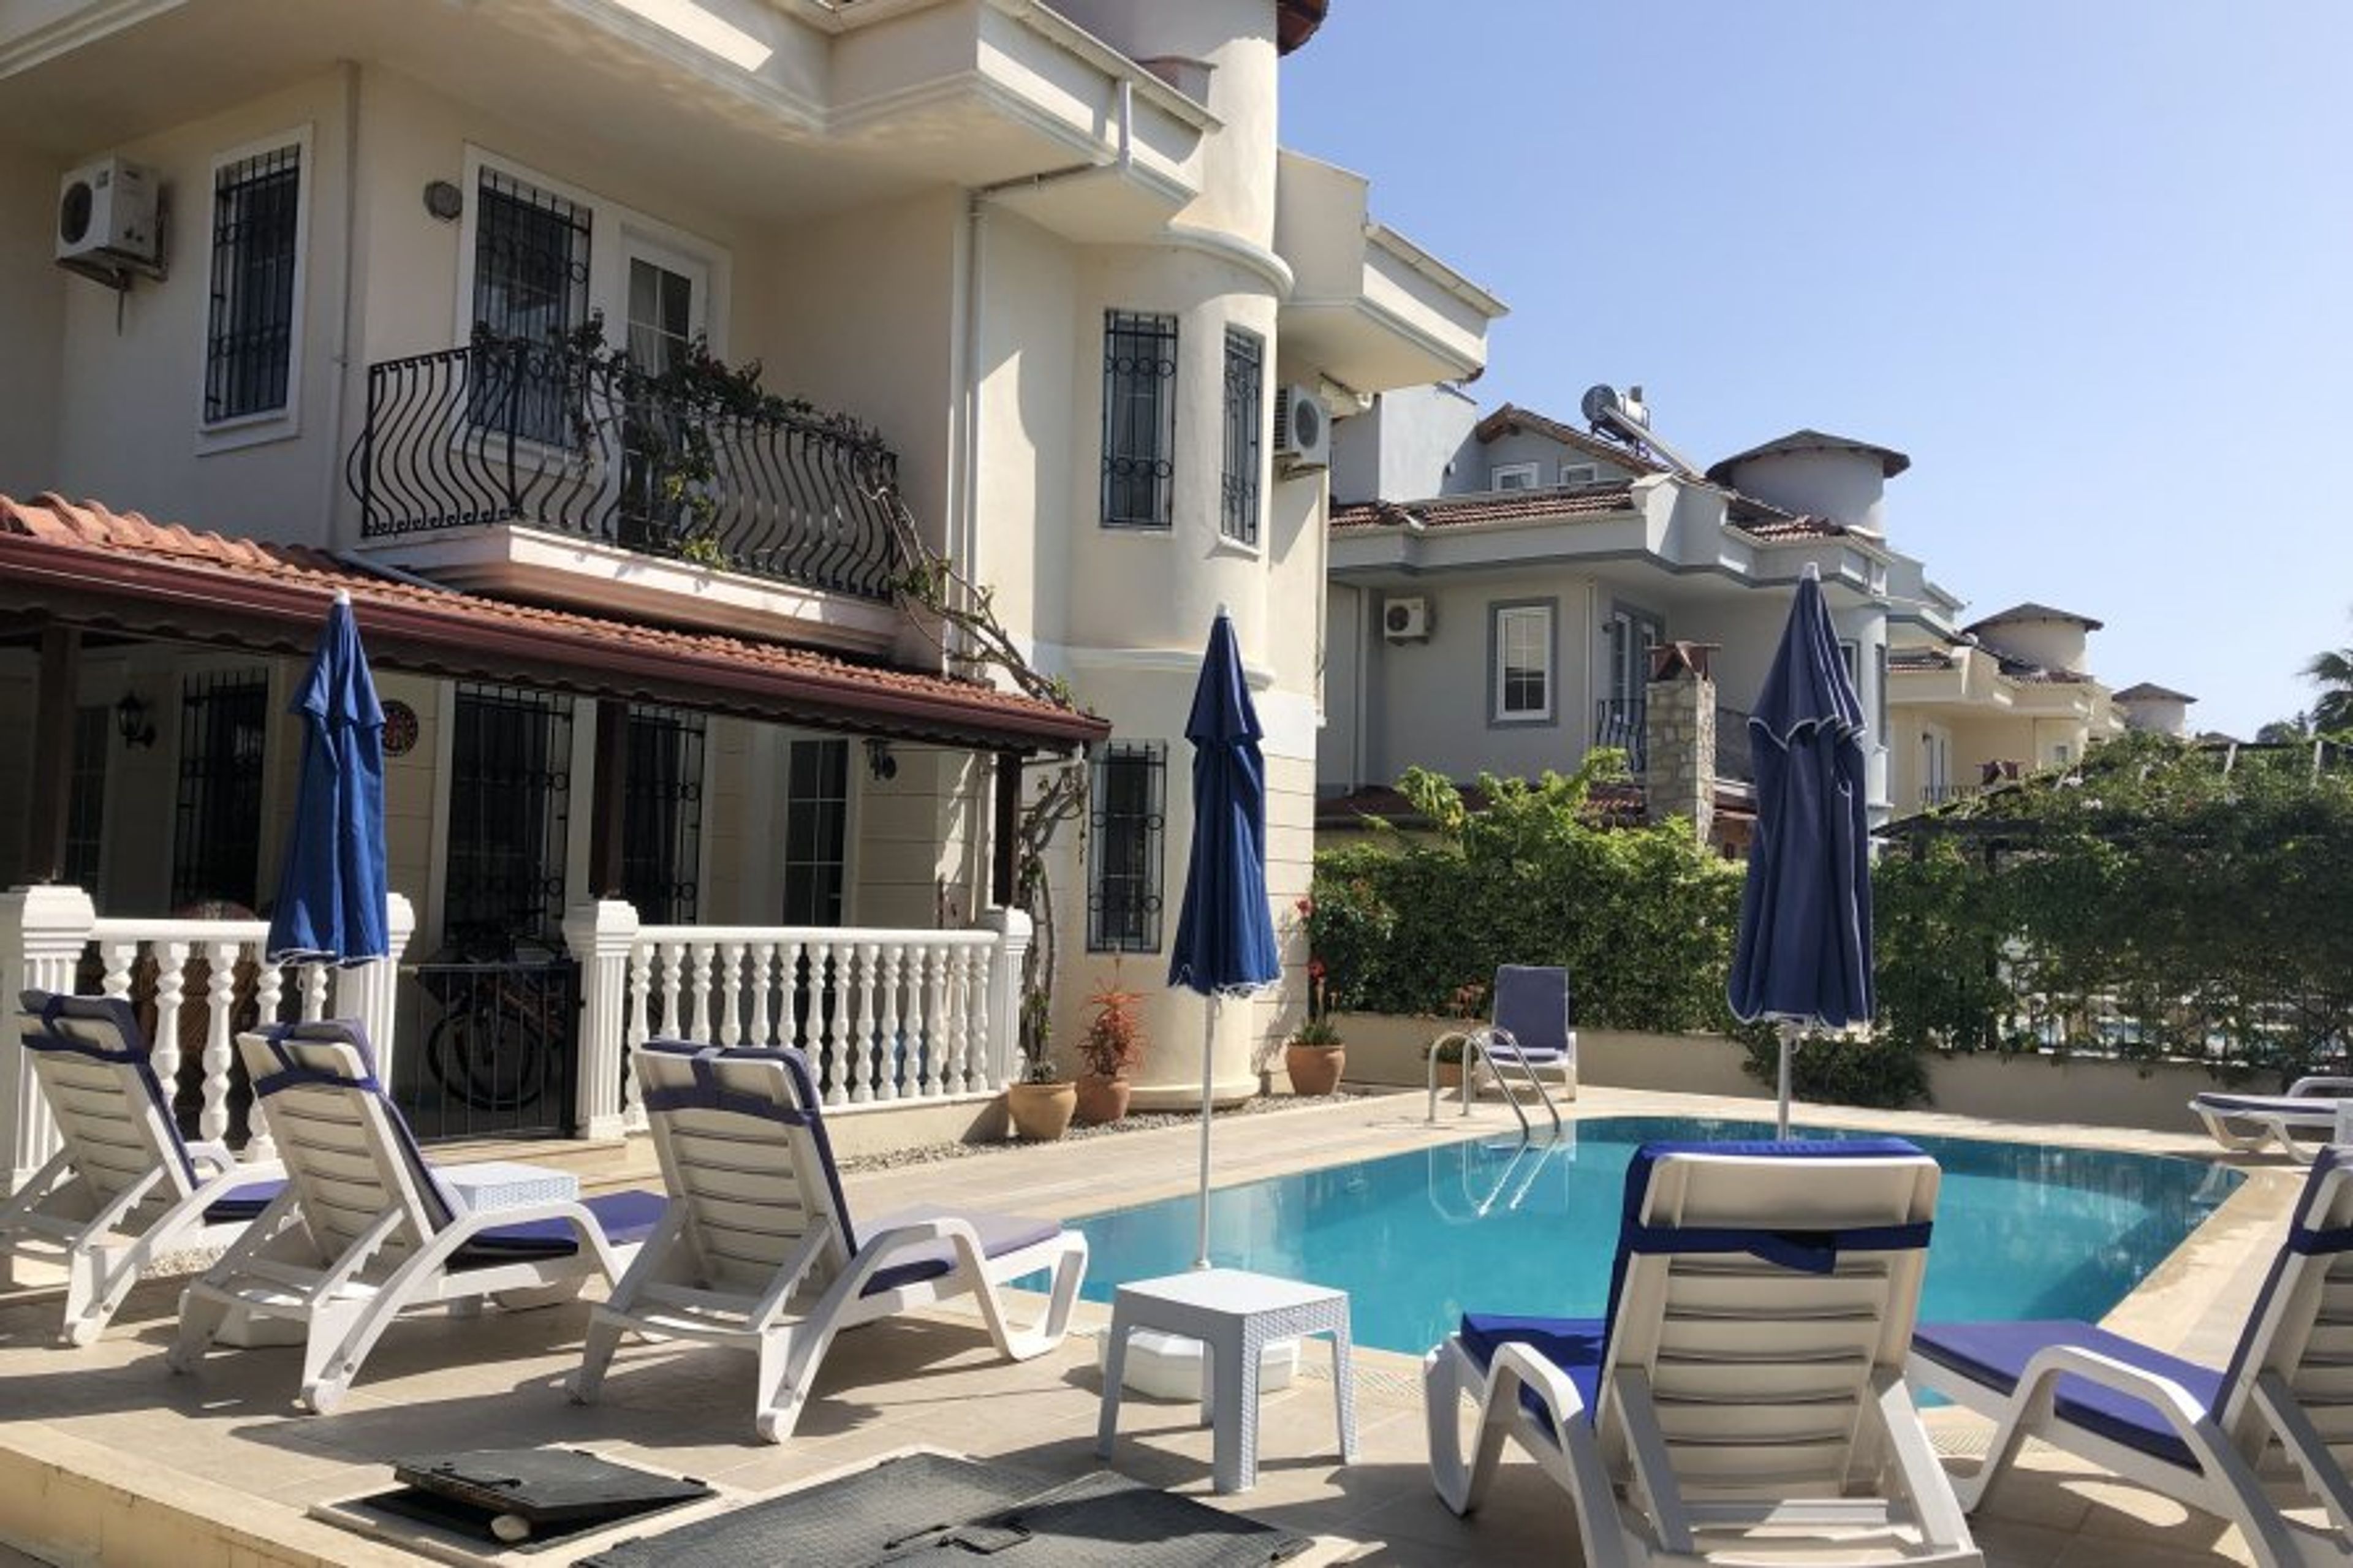 illa Guzel private pool, sunbathing terrace and villa